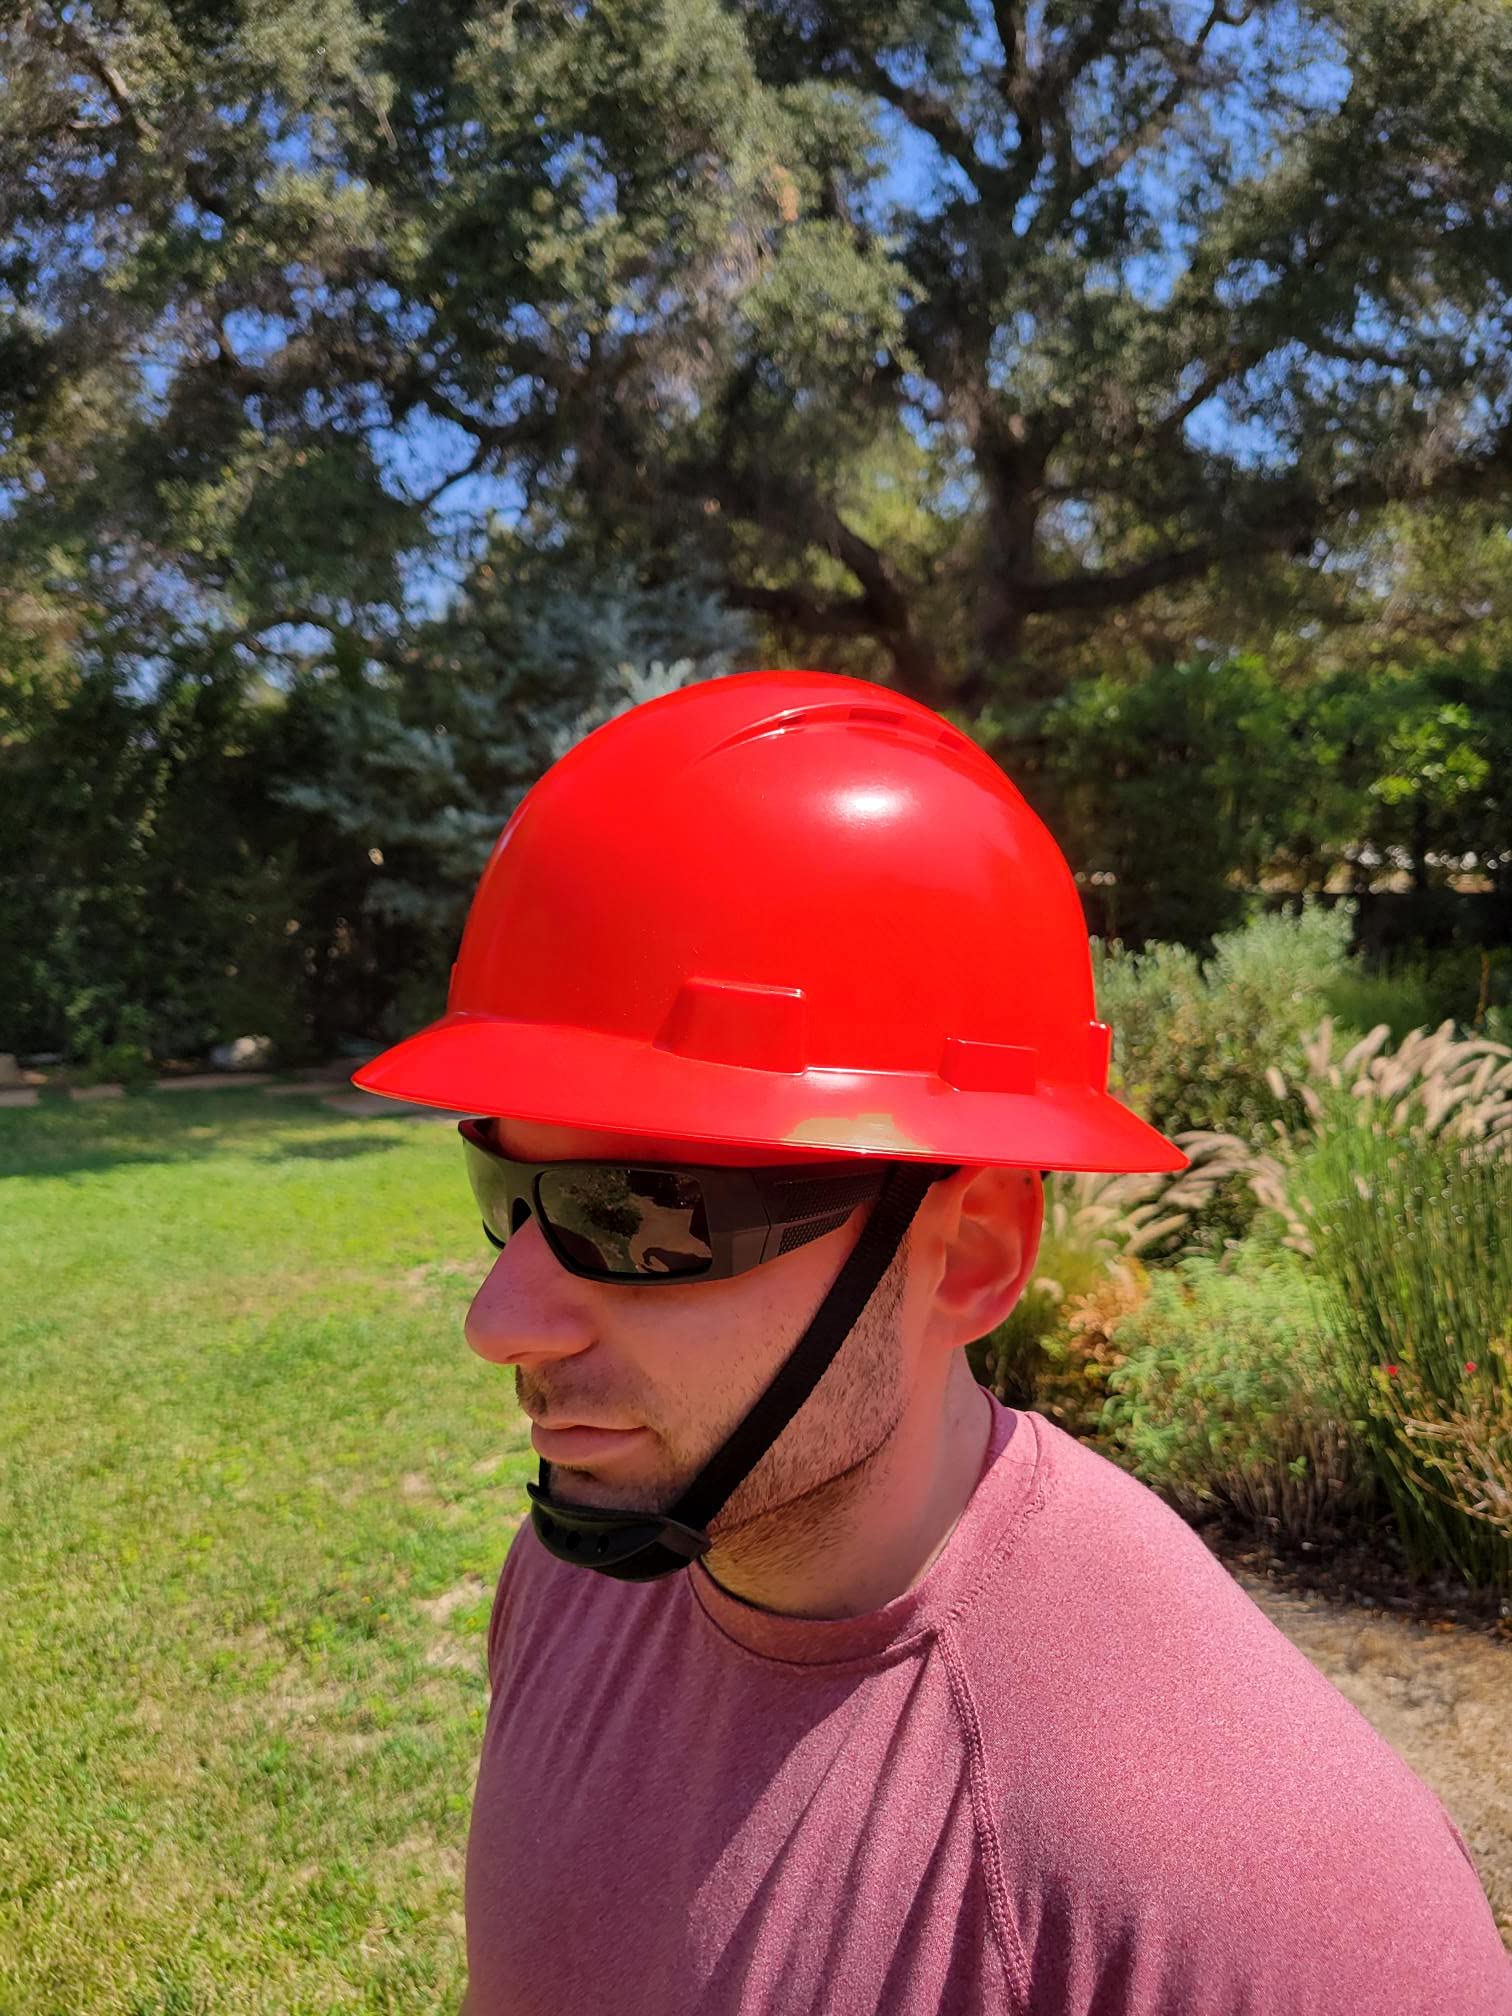 Full Brim Vented Hard Hats Construction OSHA Safety Helmet 6 Point Ratcheting System | Meets ANSI Z89.1 | Personal Protective Equipment Carbon Fiber Design Hard Hat